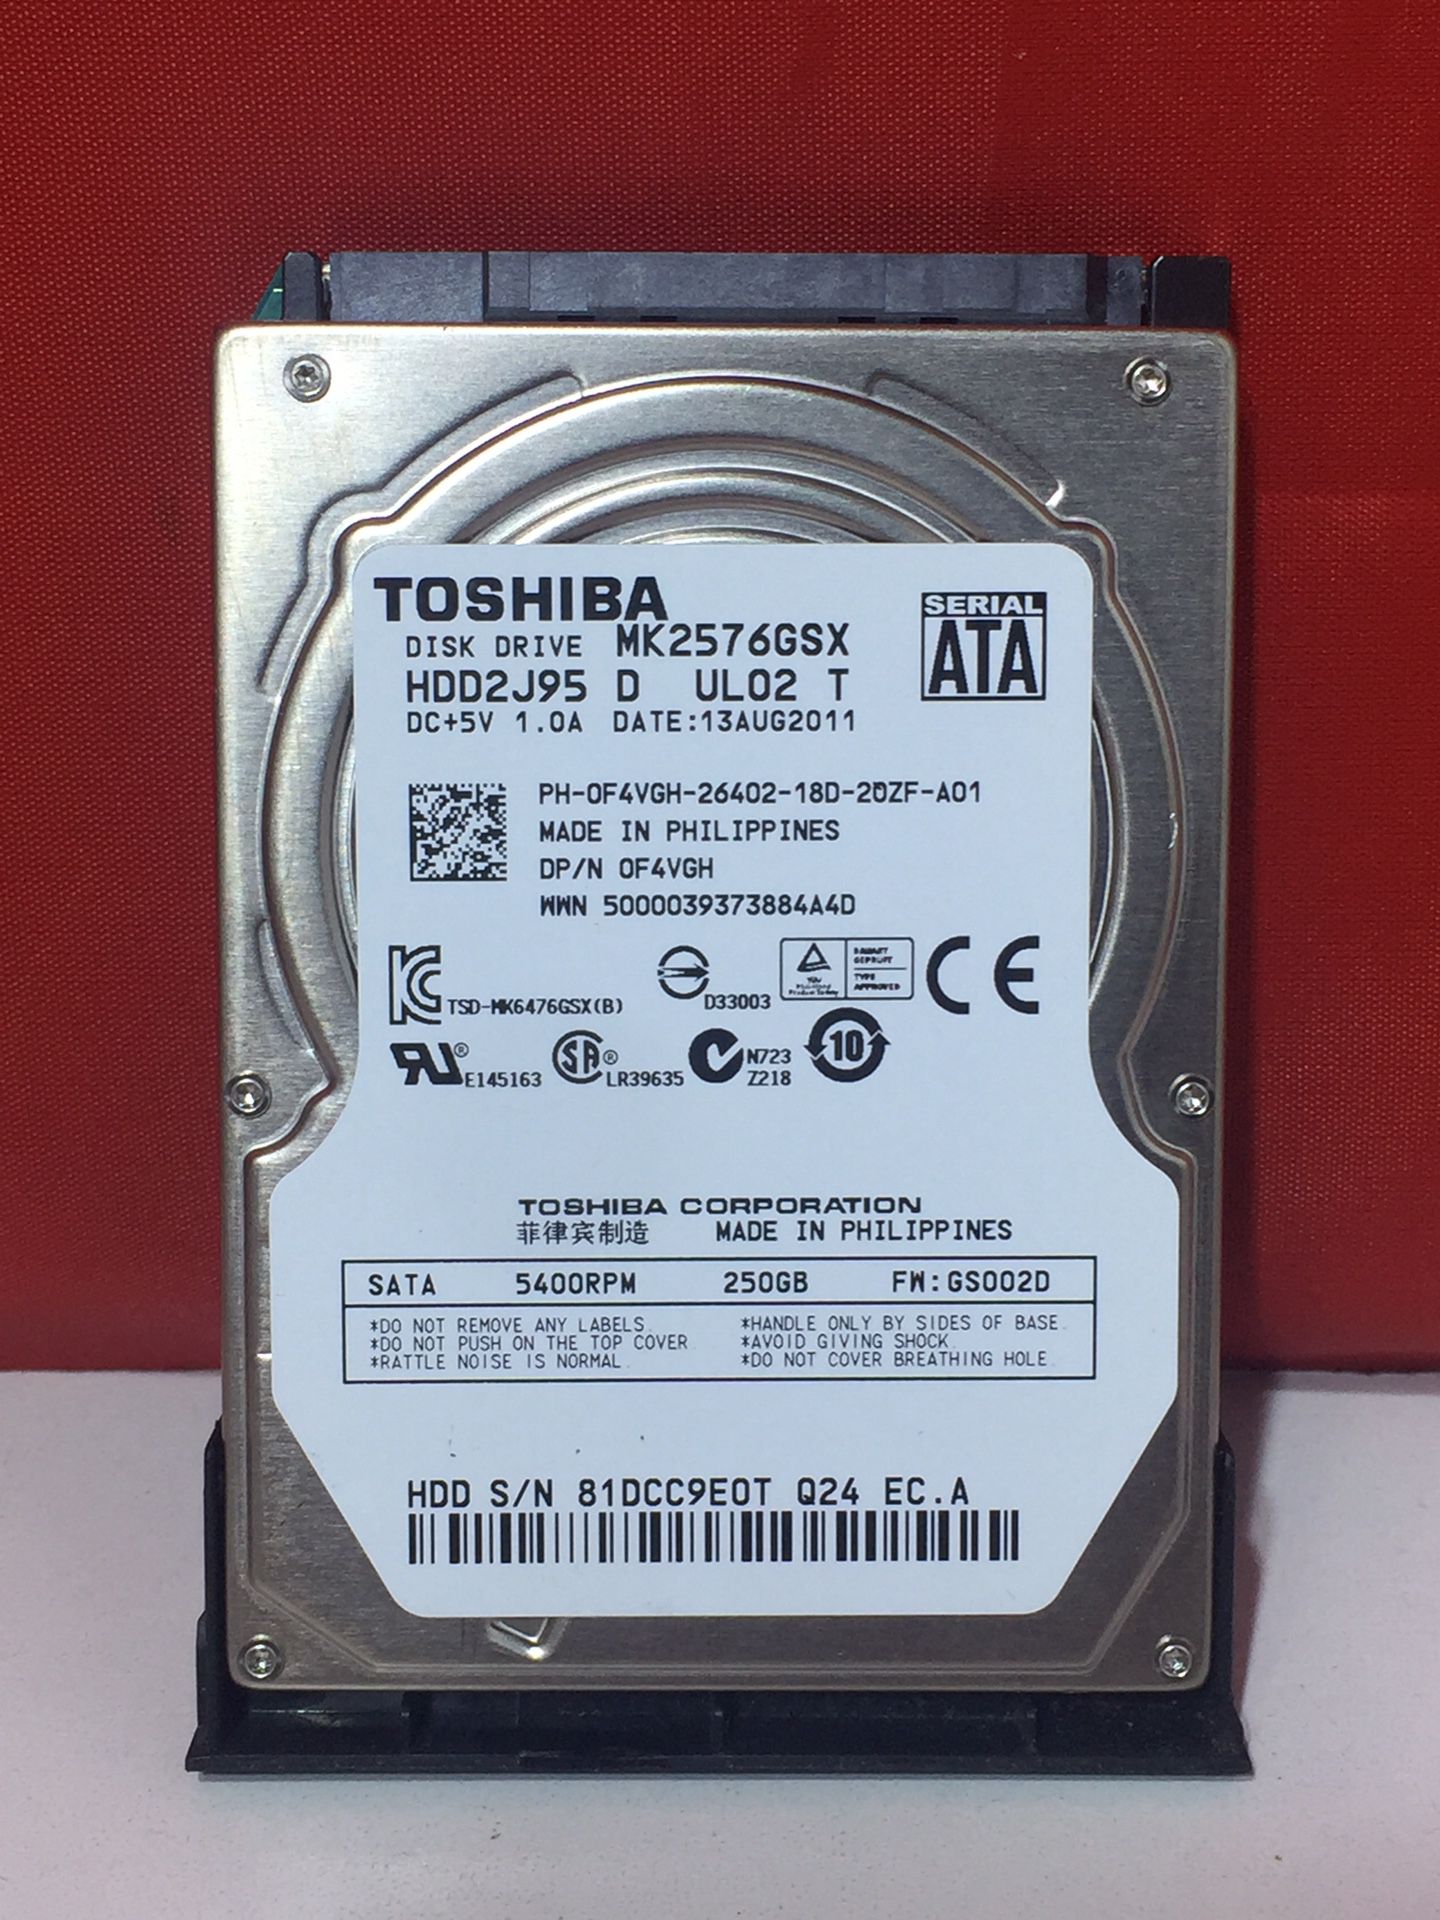 TOSHIBA CORPORATION SERIAL ATA MK2576GSX 250GB Internal Laptop Hard Drive